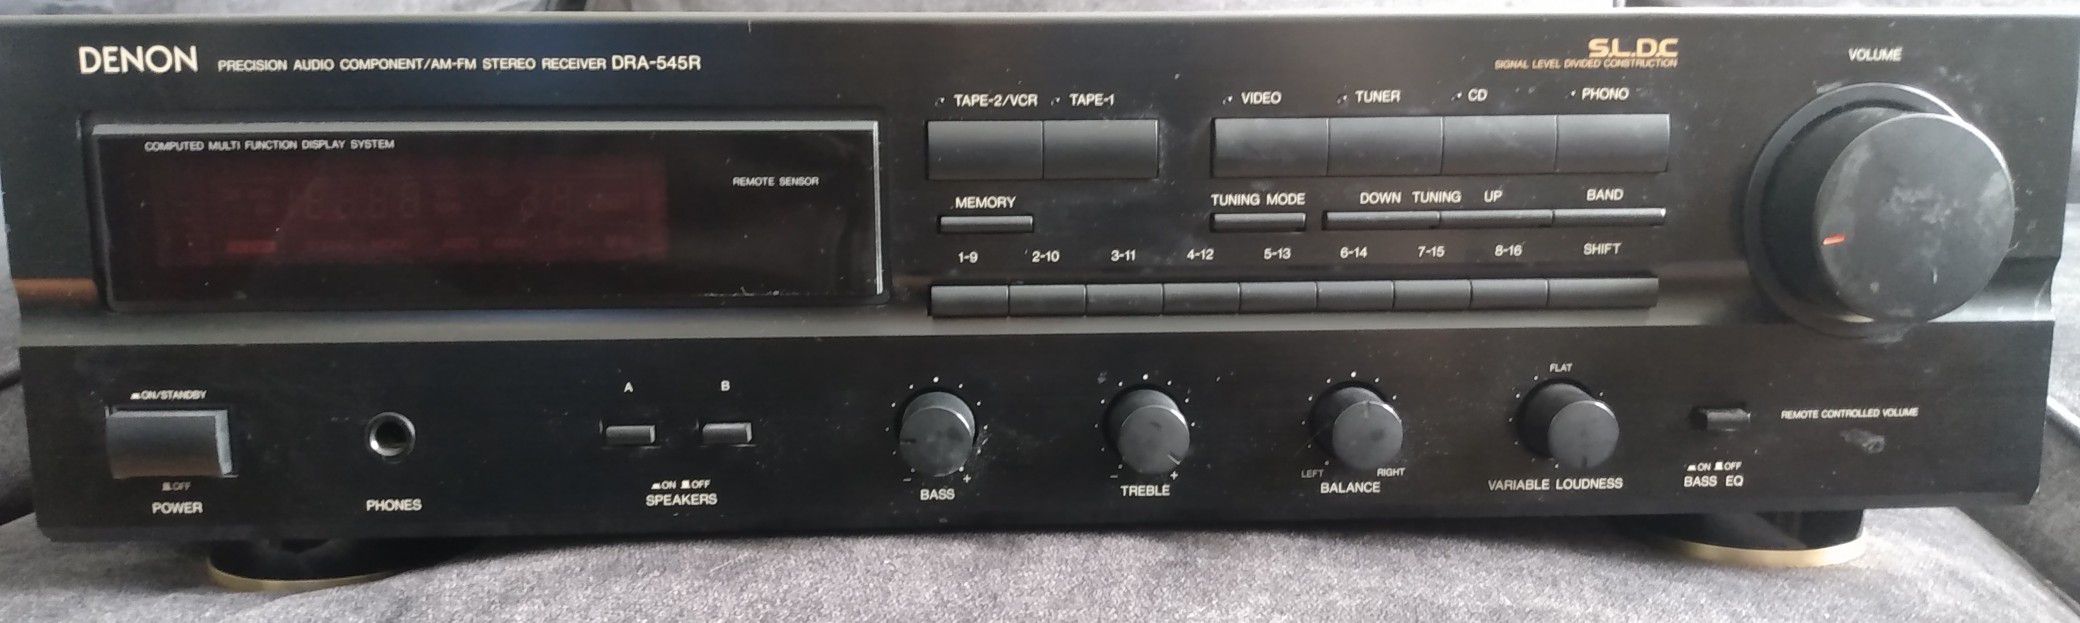 Denon DRA-545R AM/FM stereo receiver